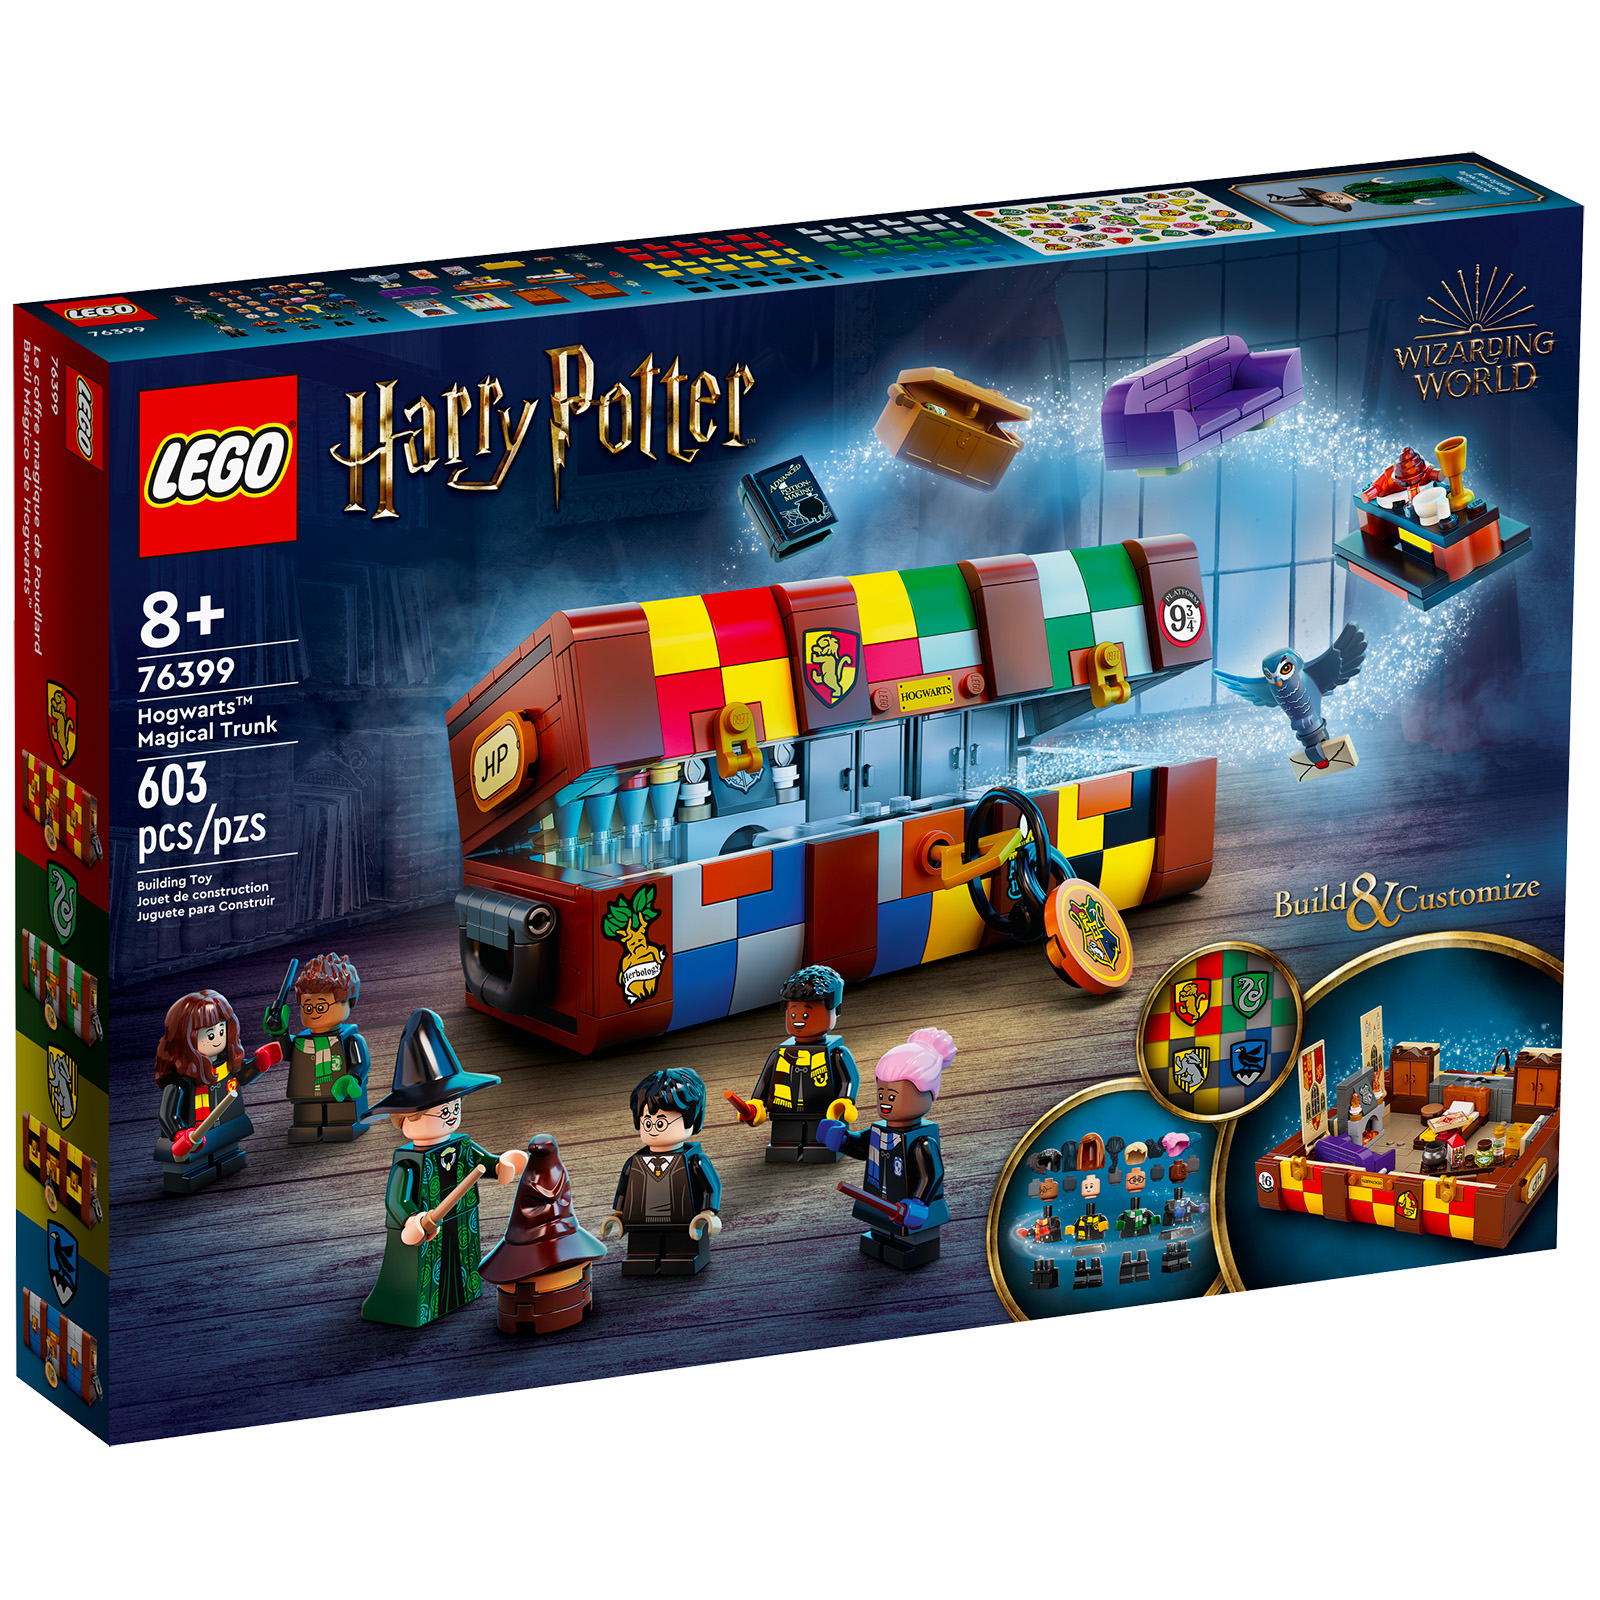 Harry Potter Lego 2022 ▻ New LEGO Harry Potter 2022: 76399 Hogwarts Magical Trunk - HOTH BRICKS